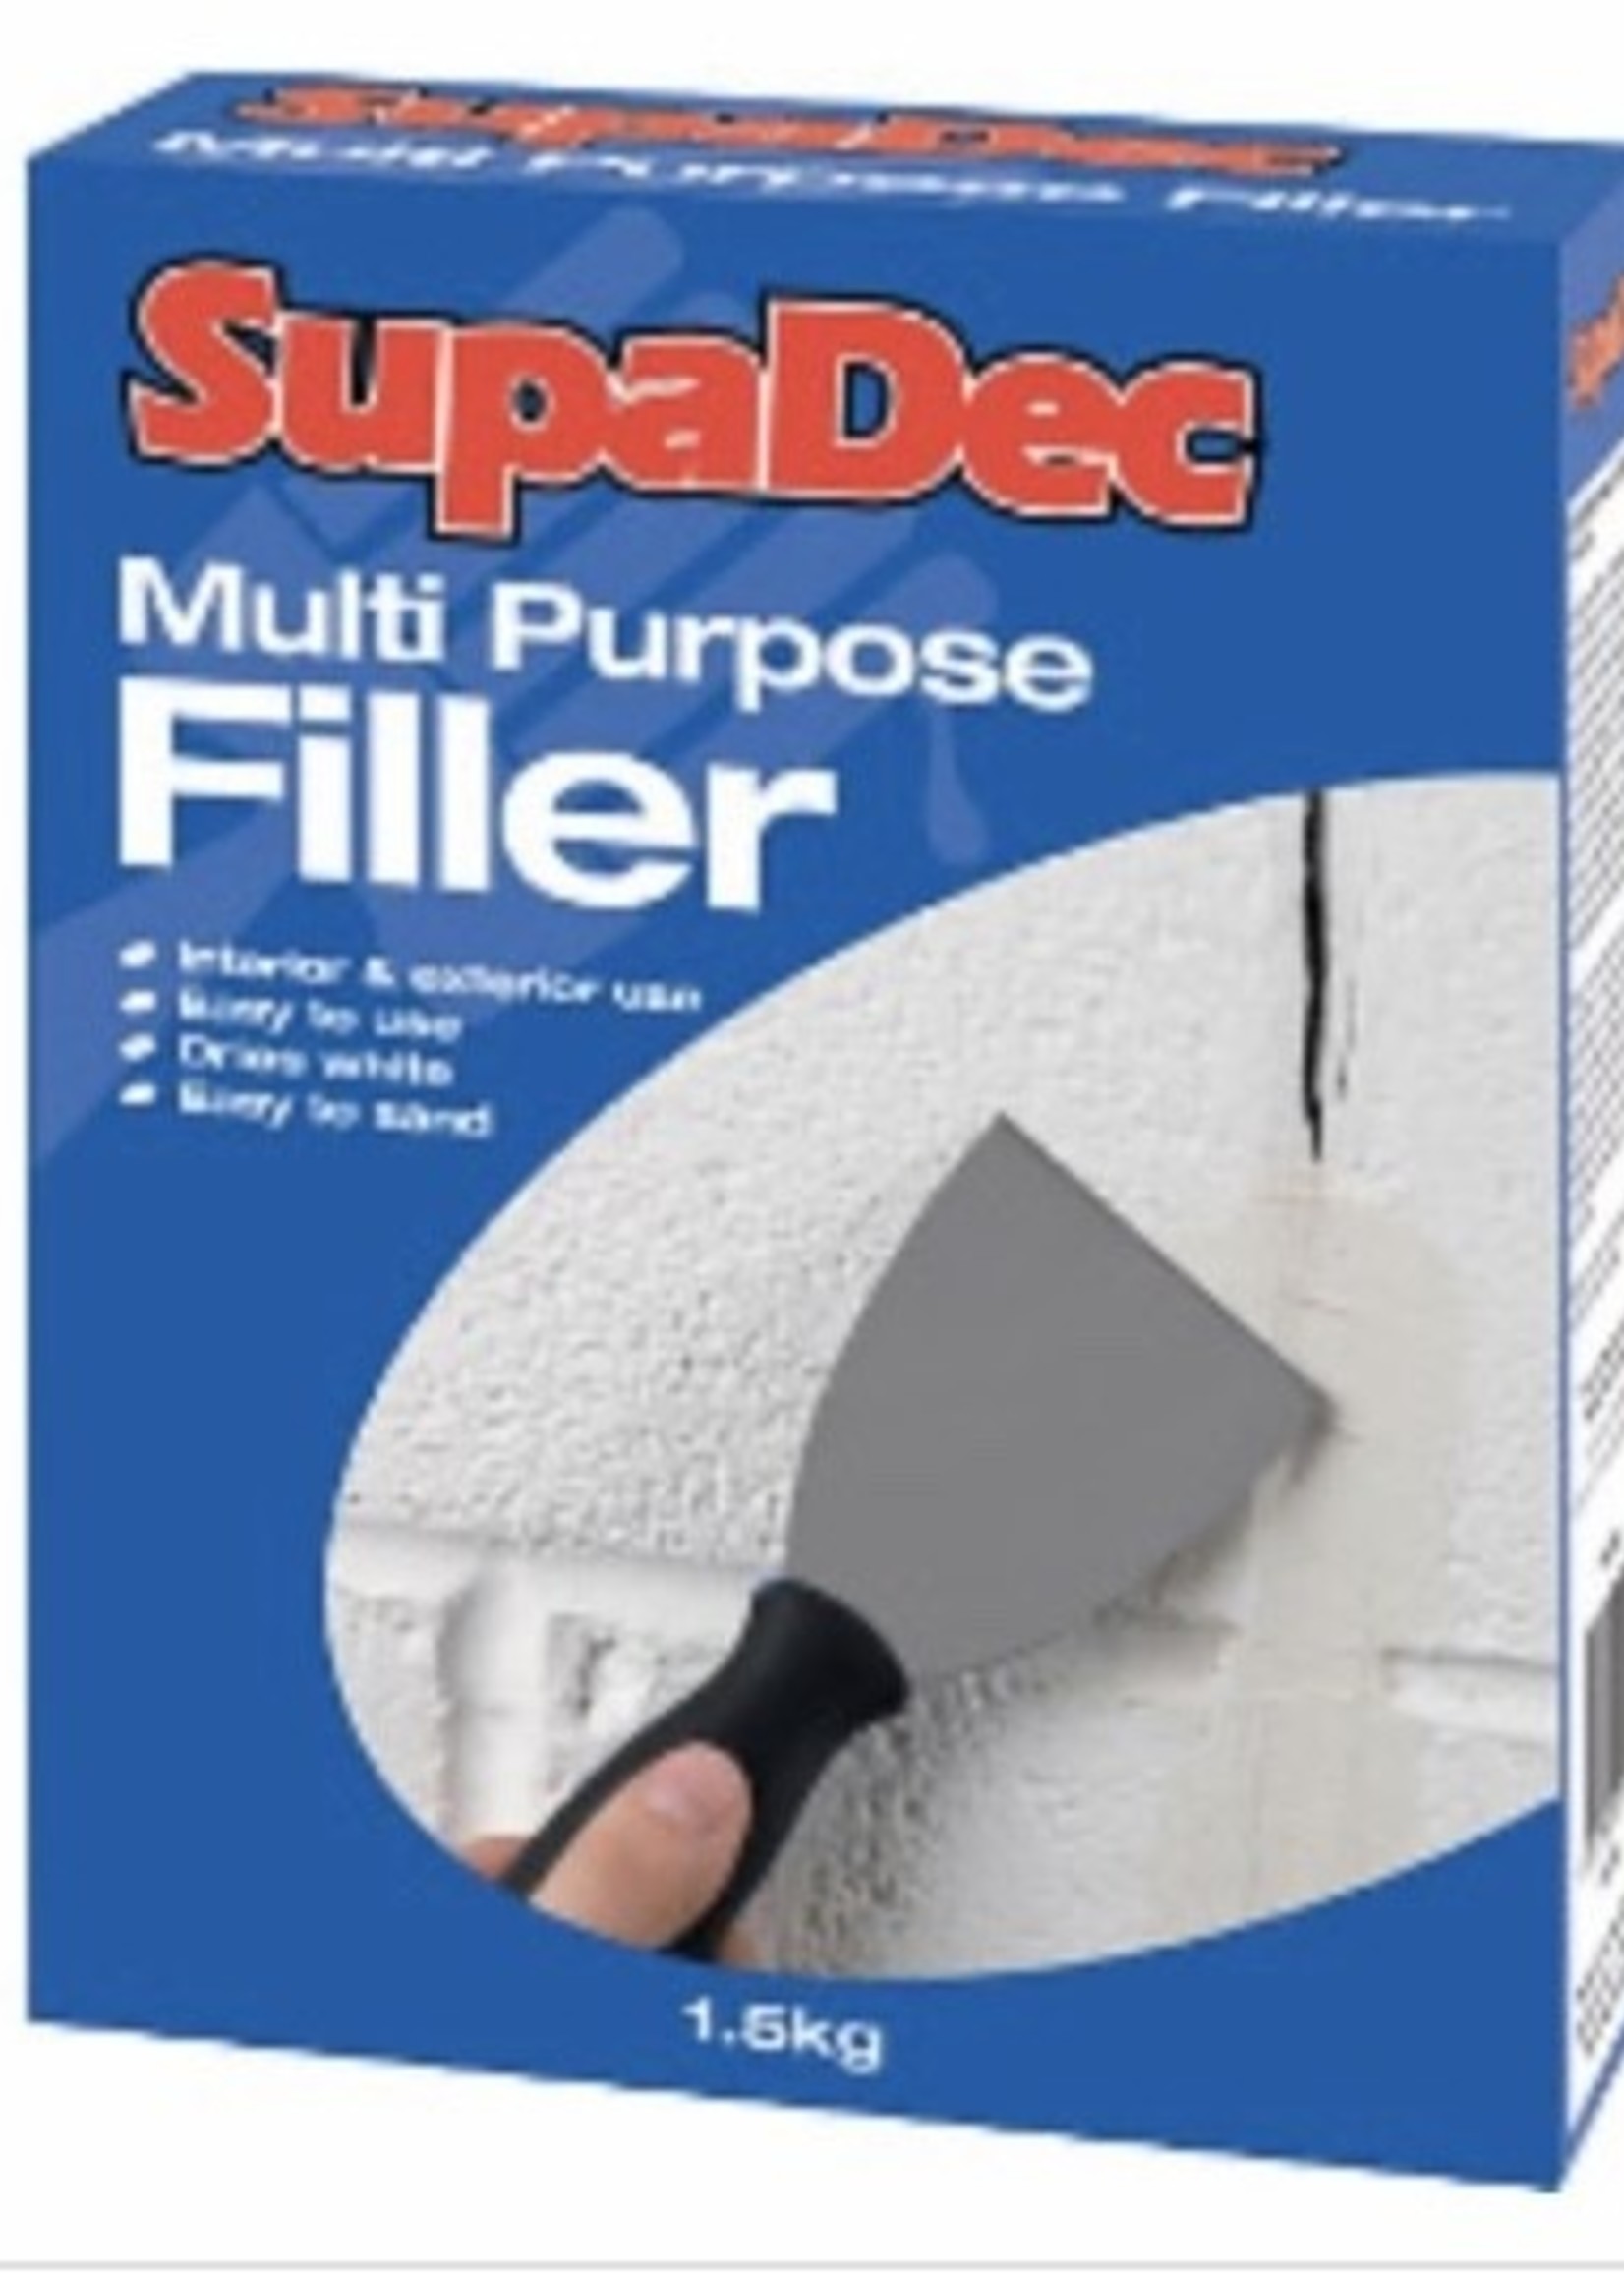 SupaDec SupaDec Multi Purpose Filler 1.5kg